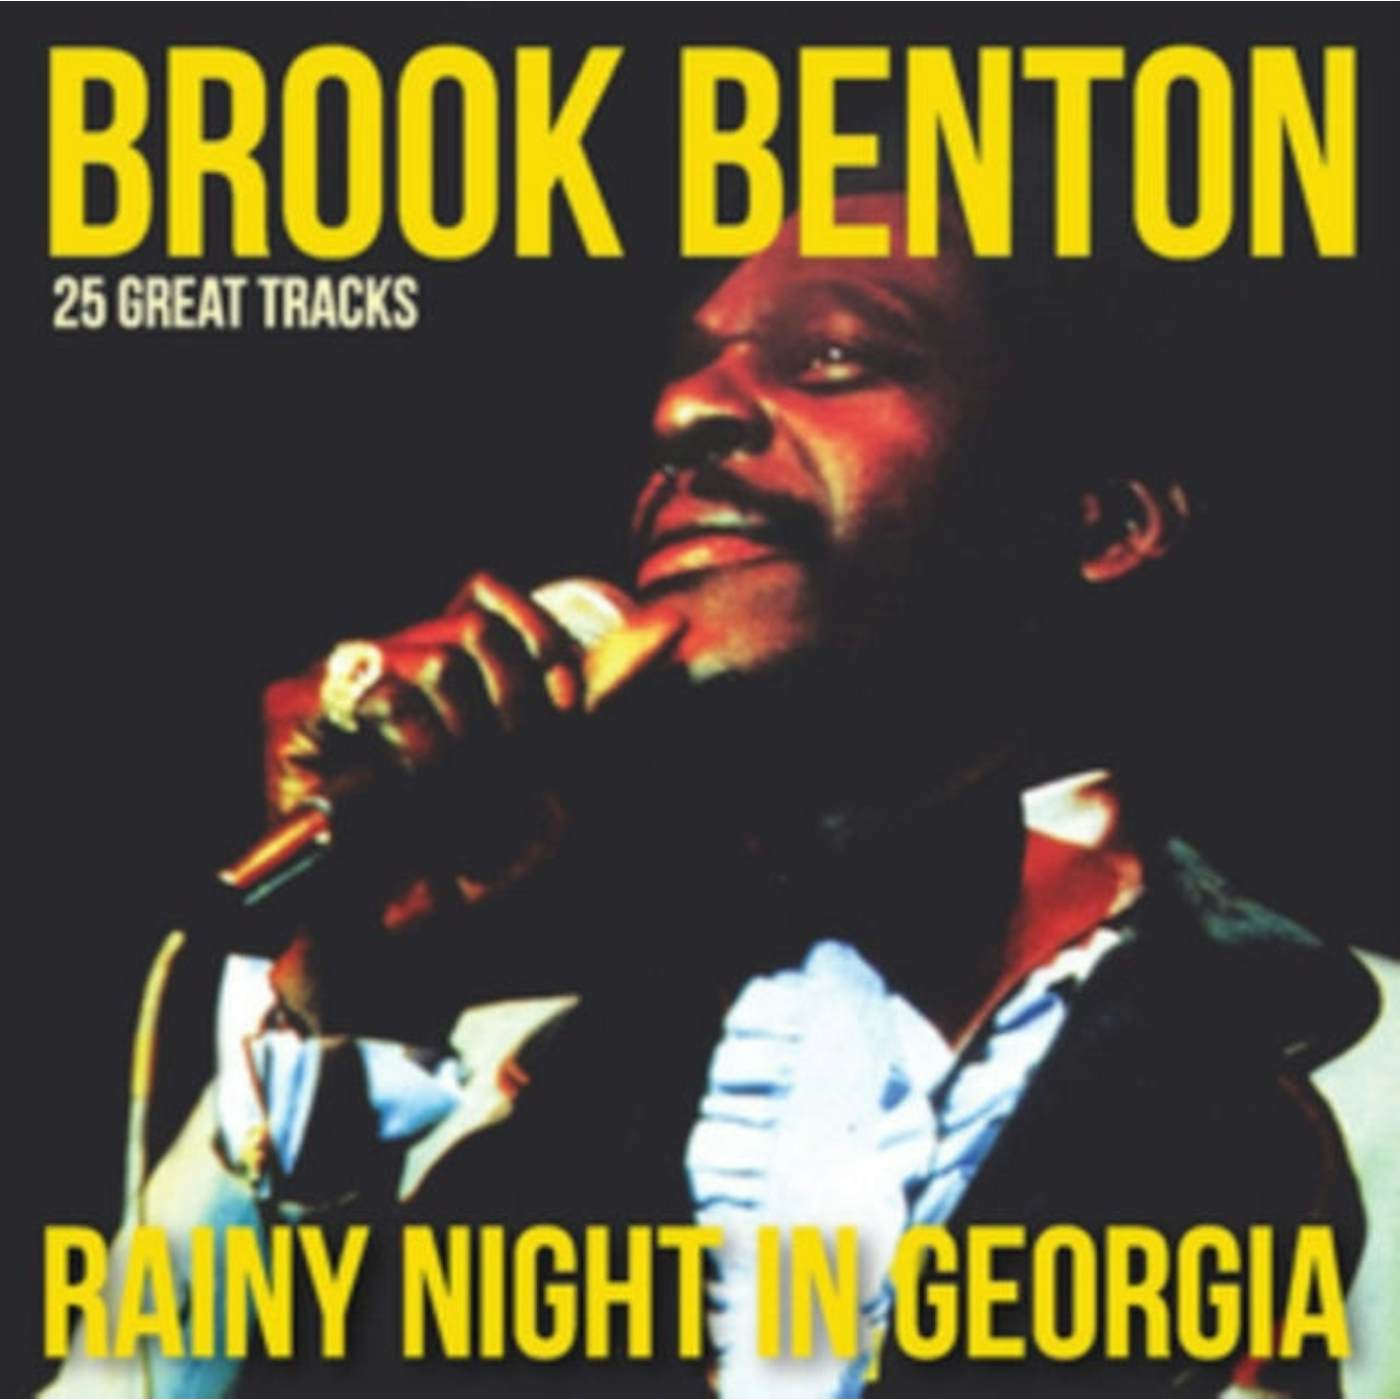 Brook Benton CD - Rainy Night In Georgia